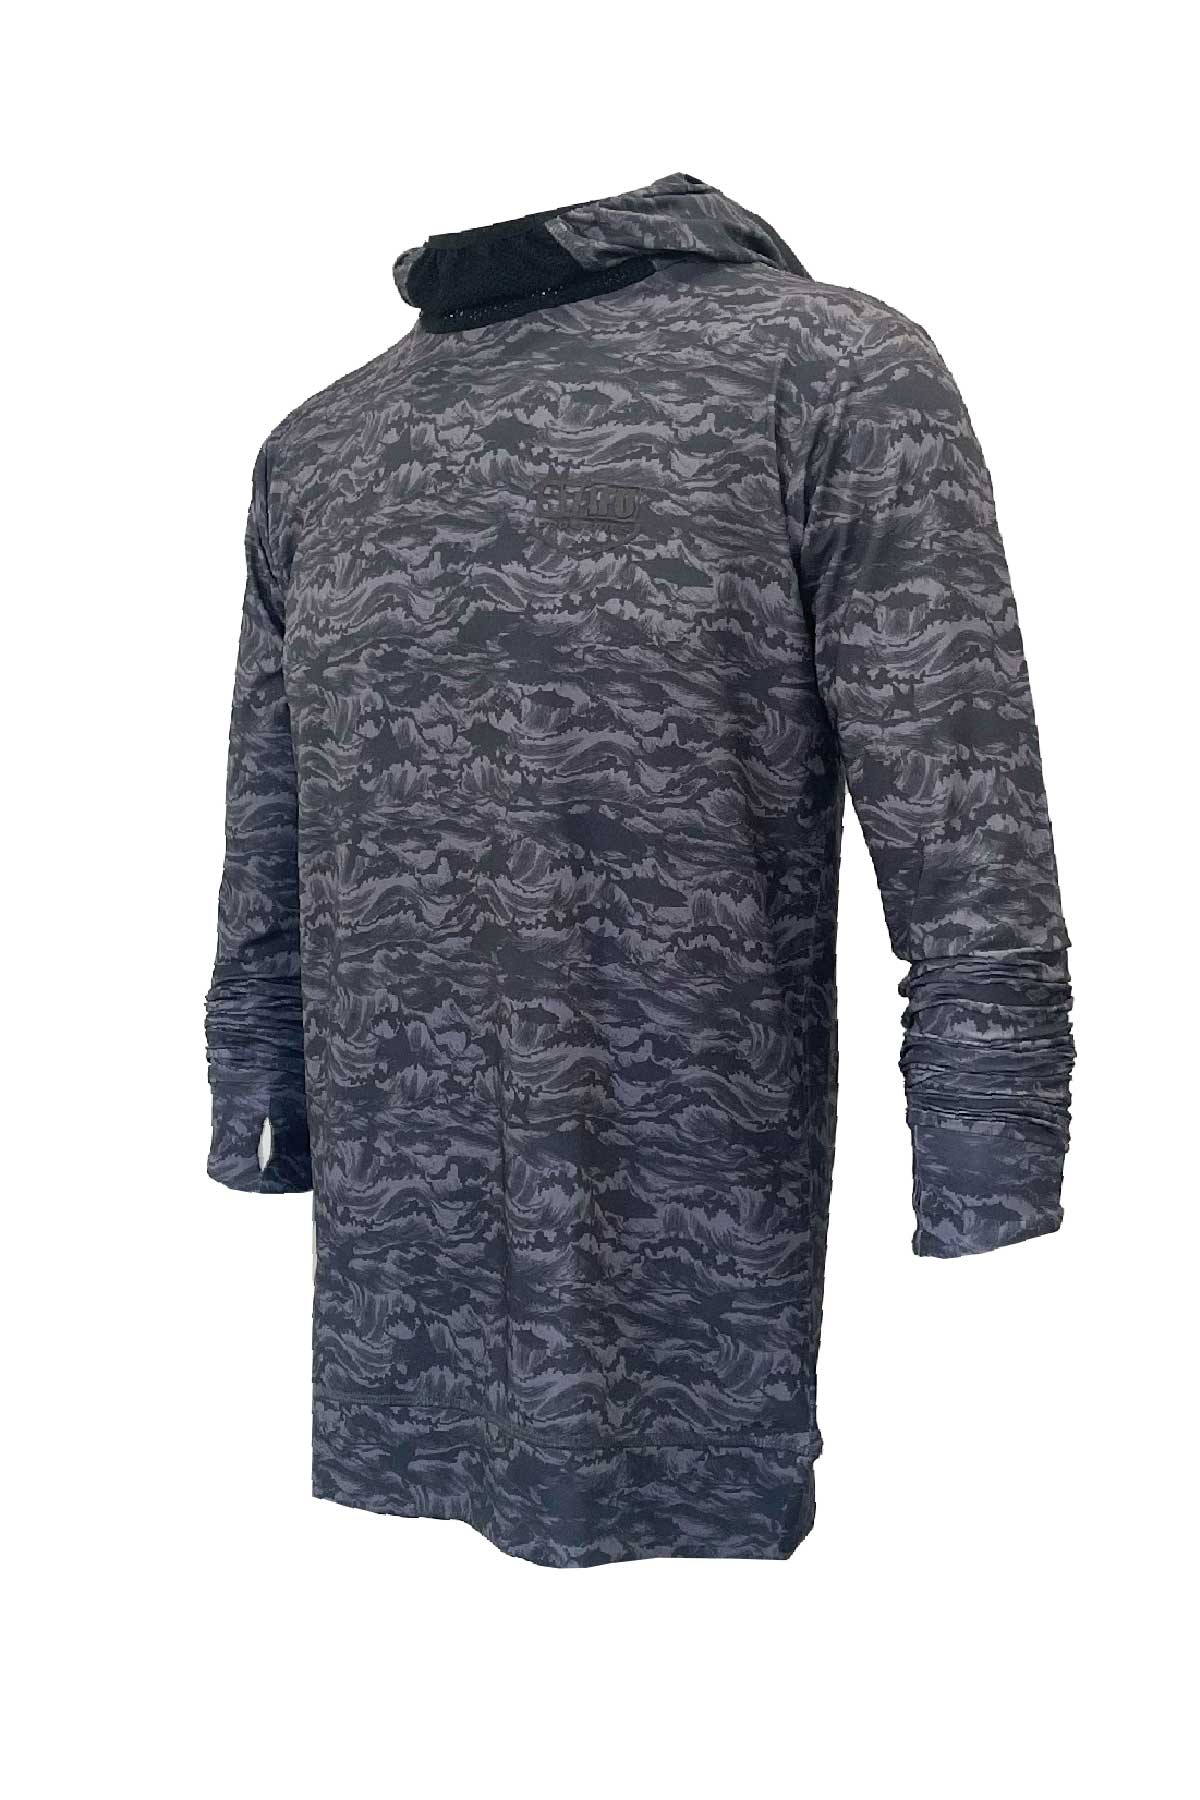 Haka Hooded Long Sleeve Fishing Shirt - Signature - Black